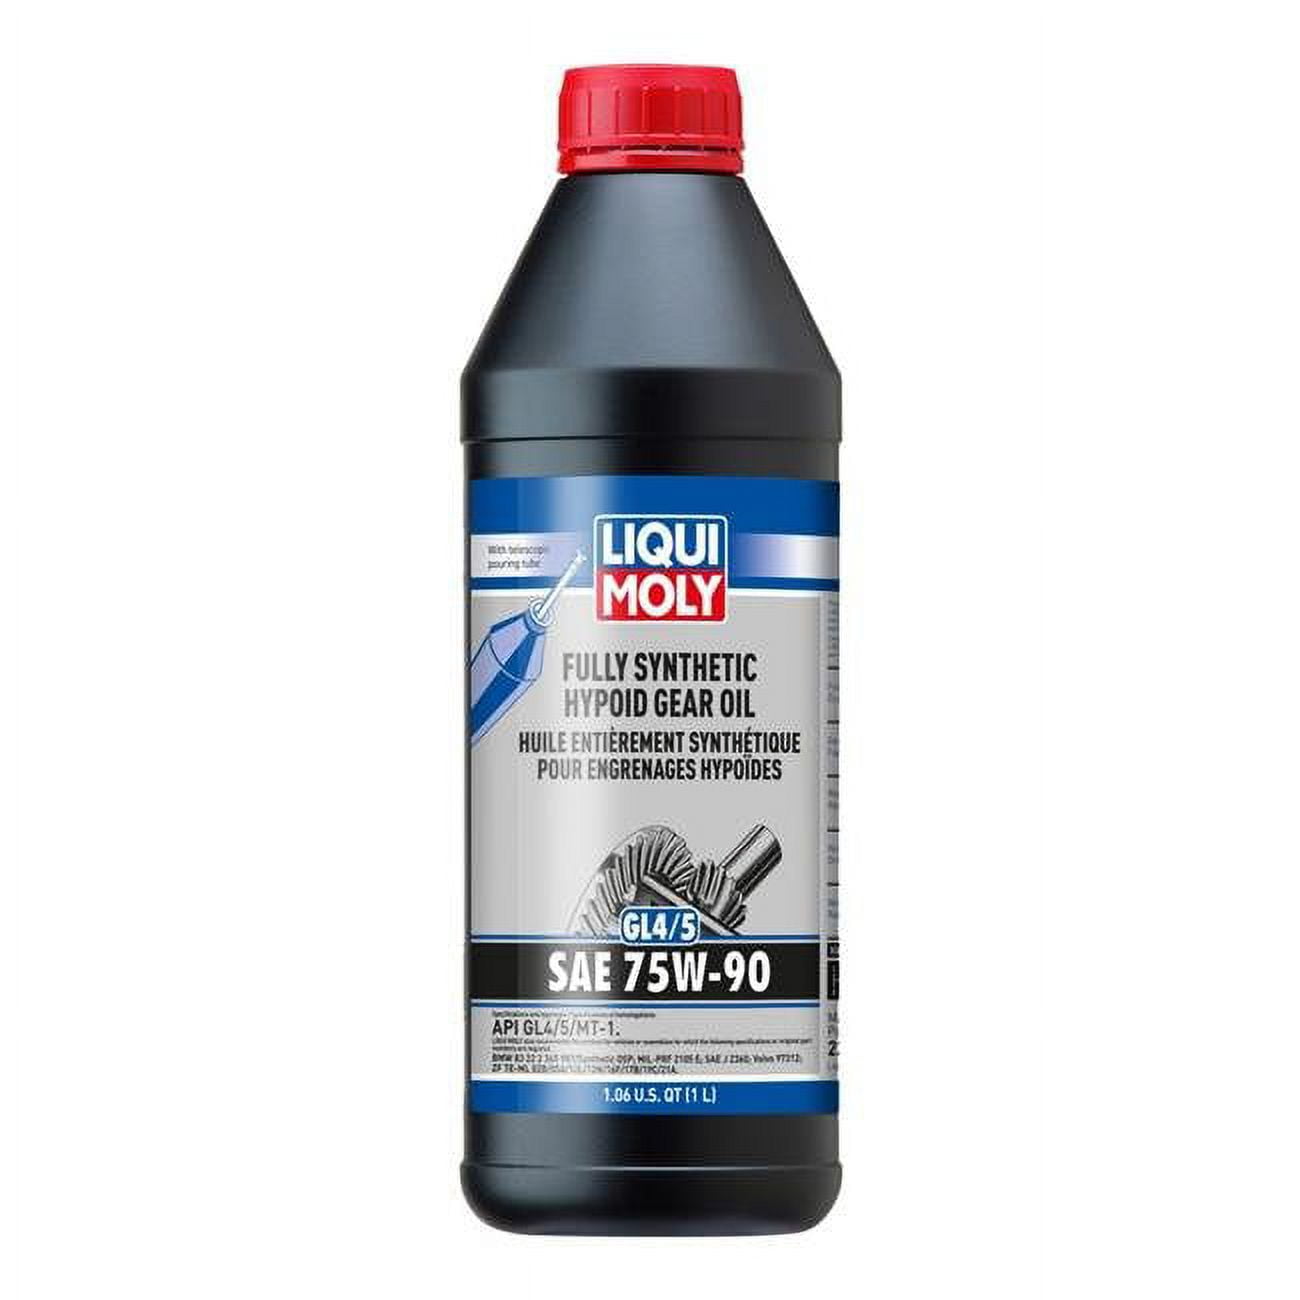 Liqui Moly 1L Fully Synthetic Hypoid Gear Oil (GL4/5) 75W90 - 22090